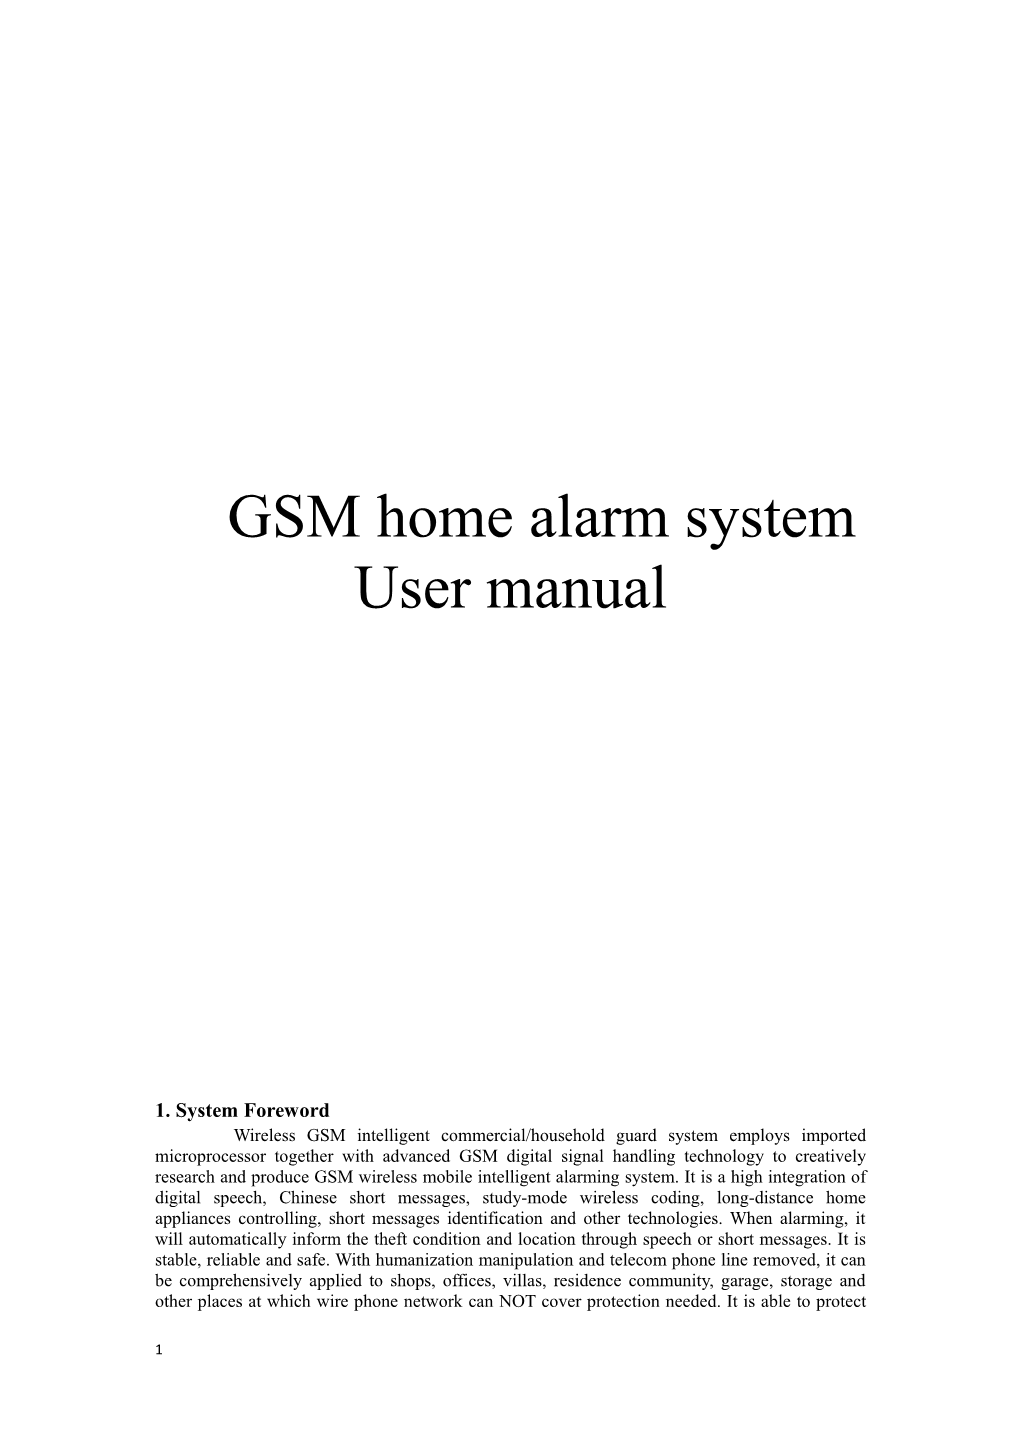 GSM Home Alarm System